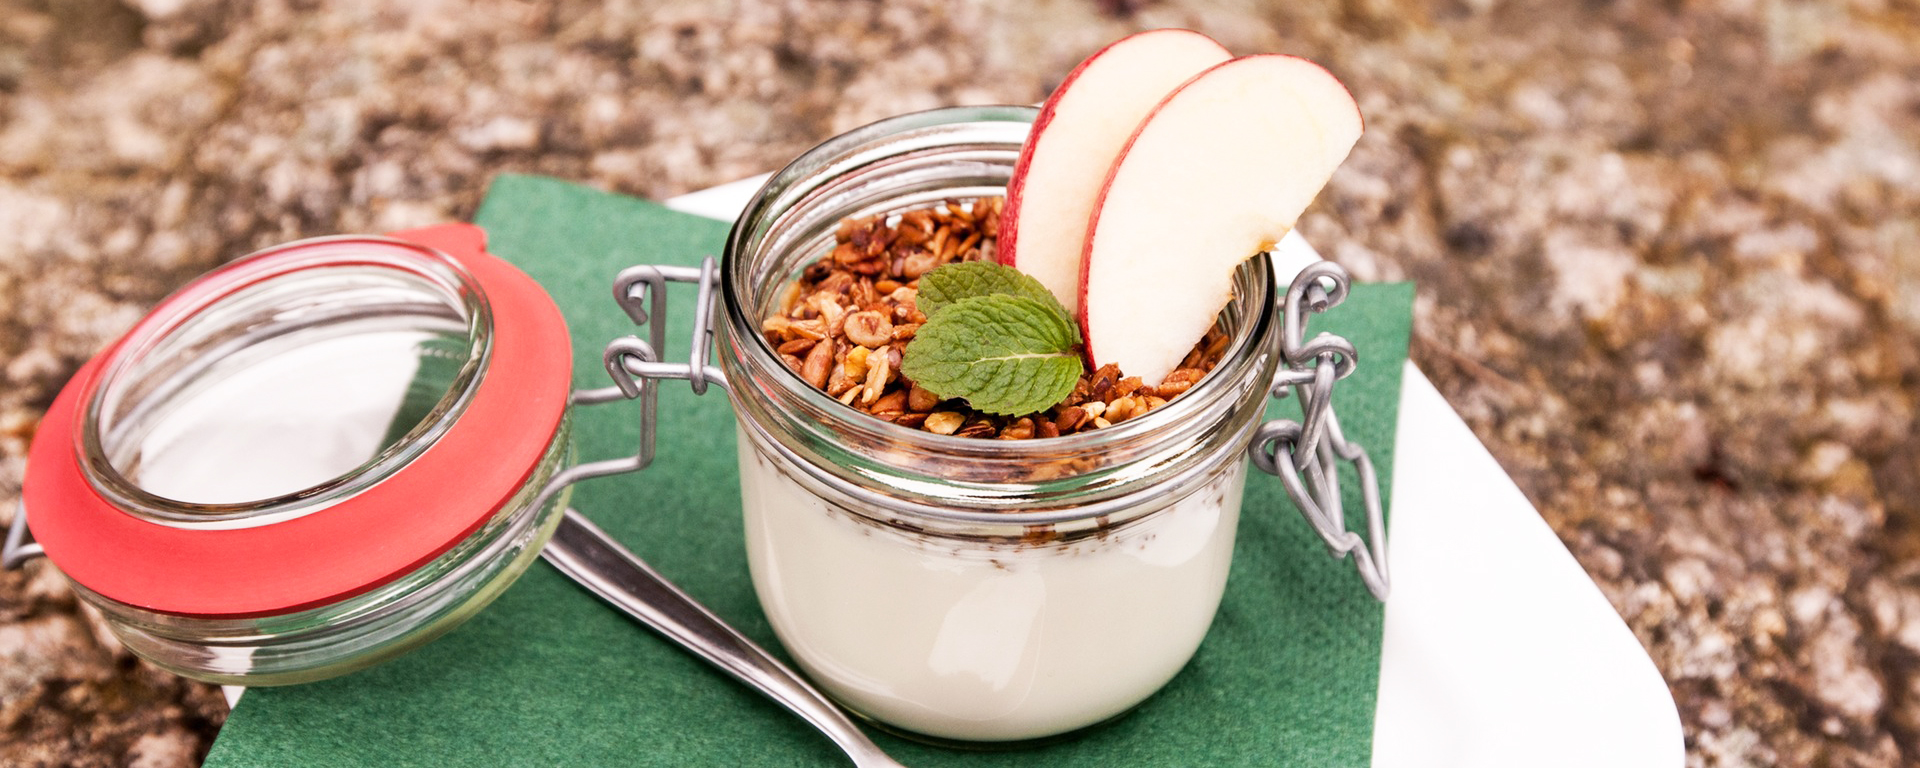 Are Apples & Yogurt Healthy?